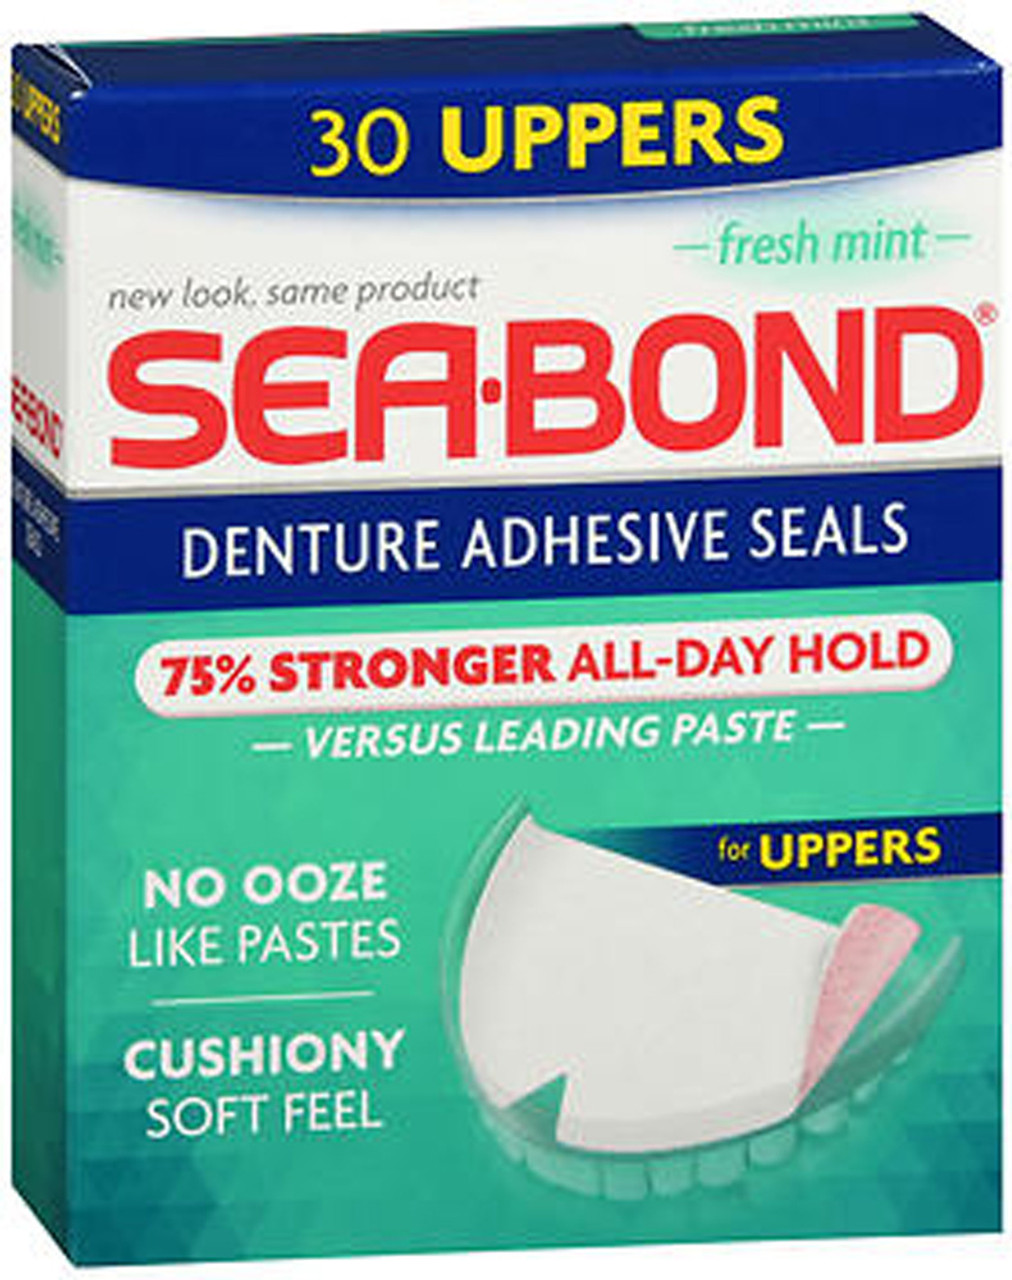 SeaBond - Denture Adhesive Seals